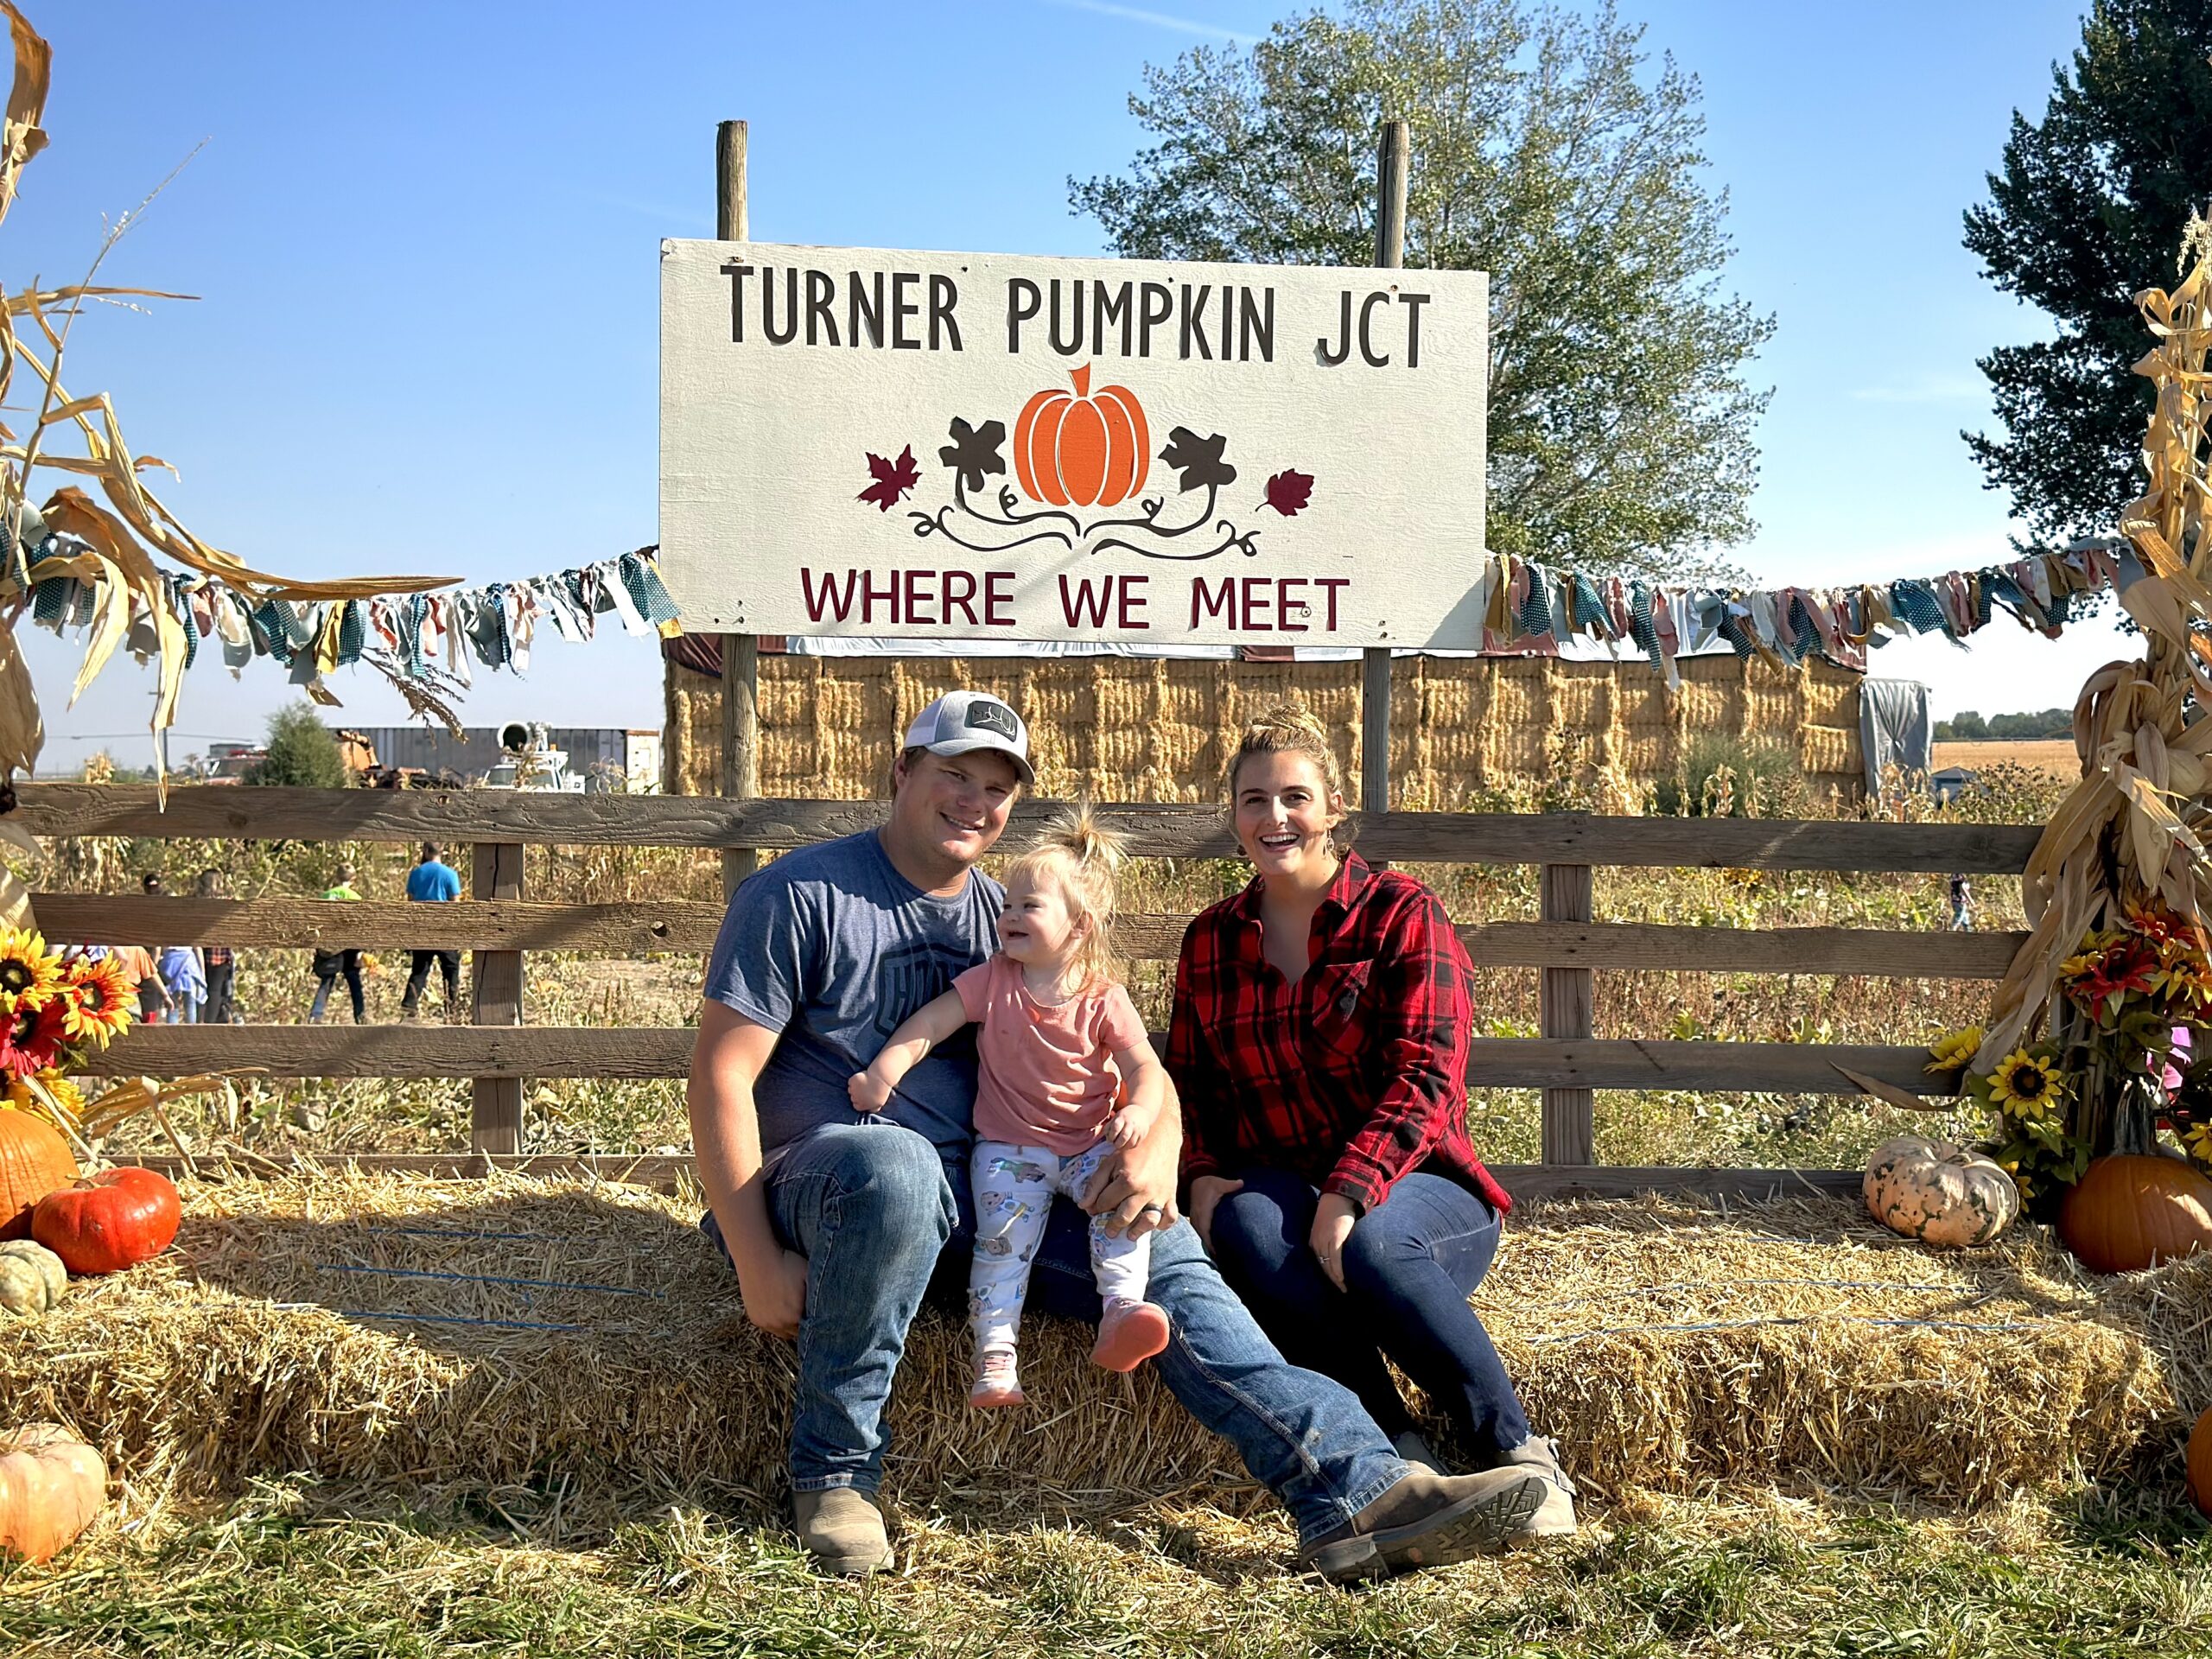 Turner pumpkin junction -066